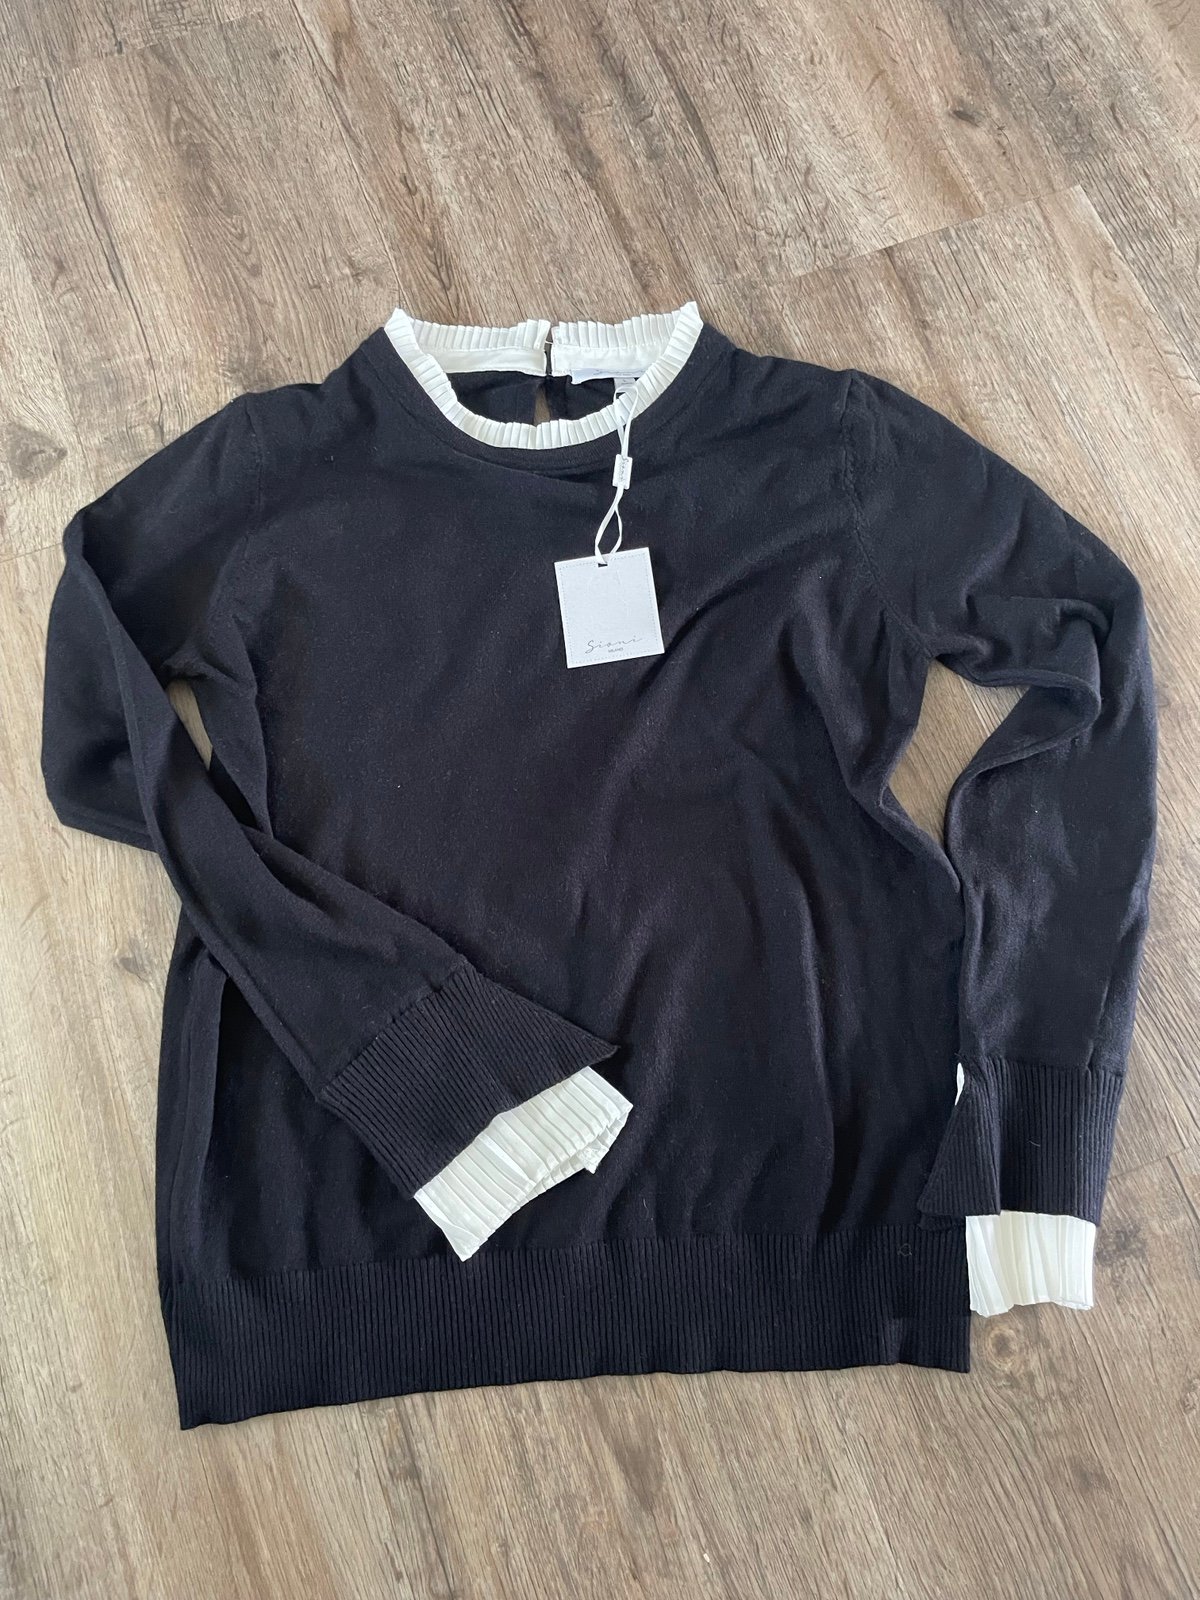 Stylish NWT Sioni Black Sweater itzrleA7p New Style